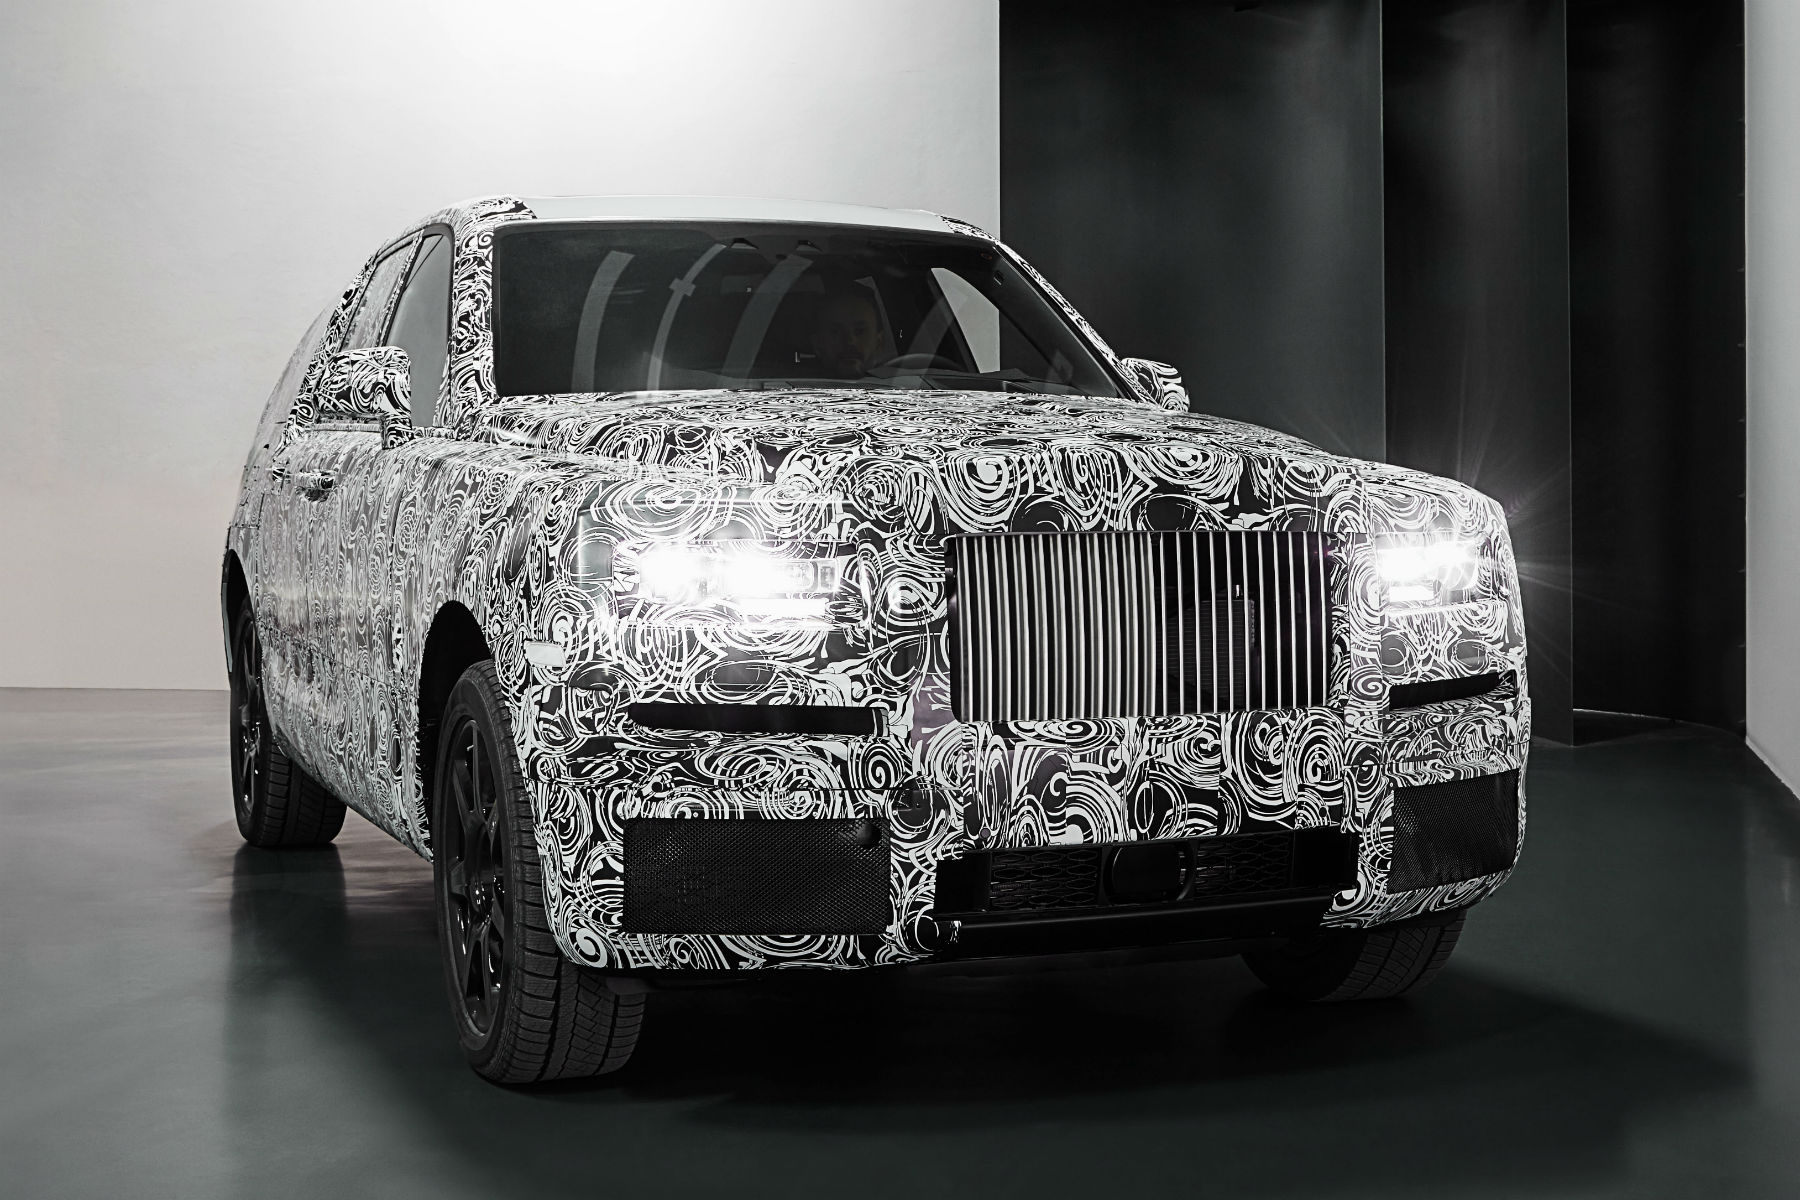 Rolls-Royce teases 2018 'Project Cullinan' SUV